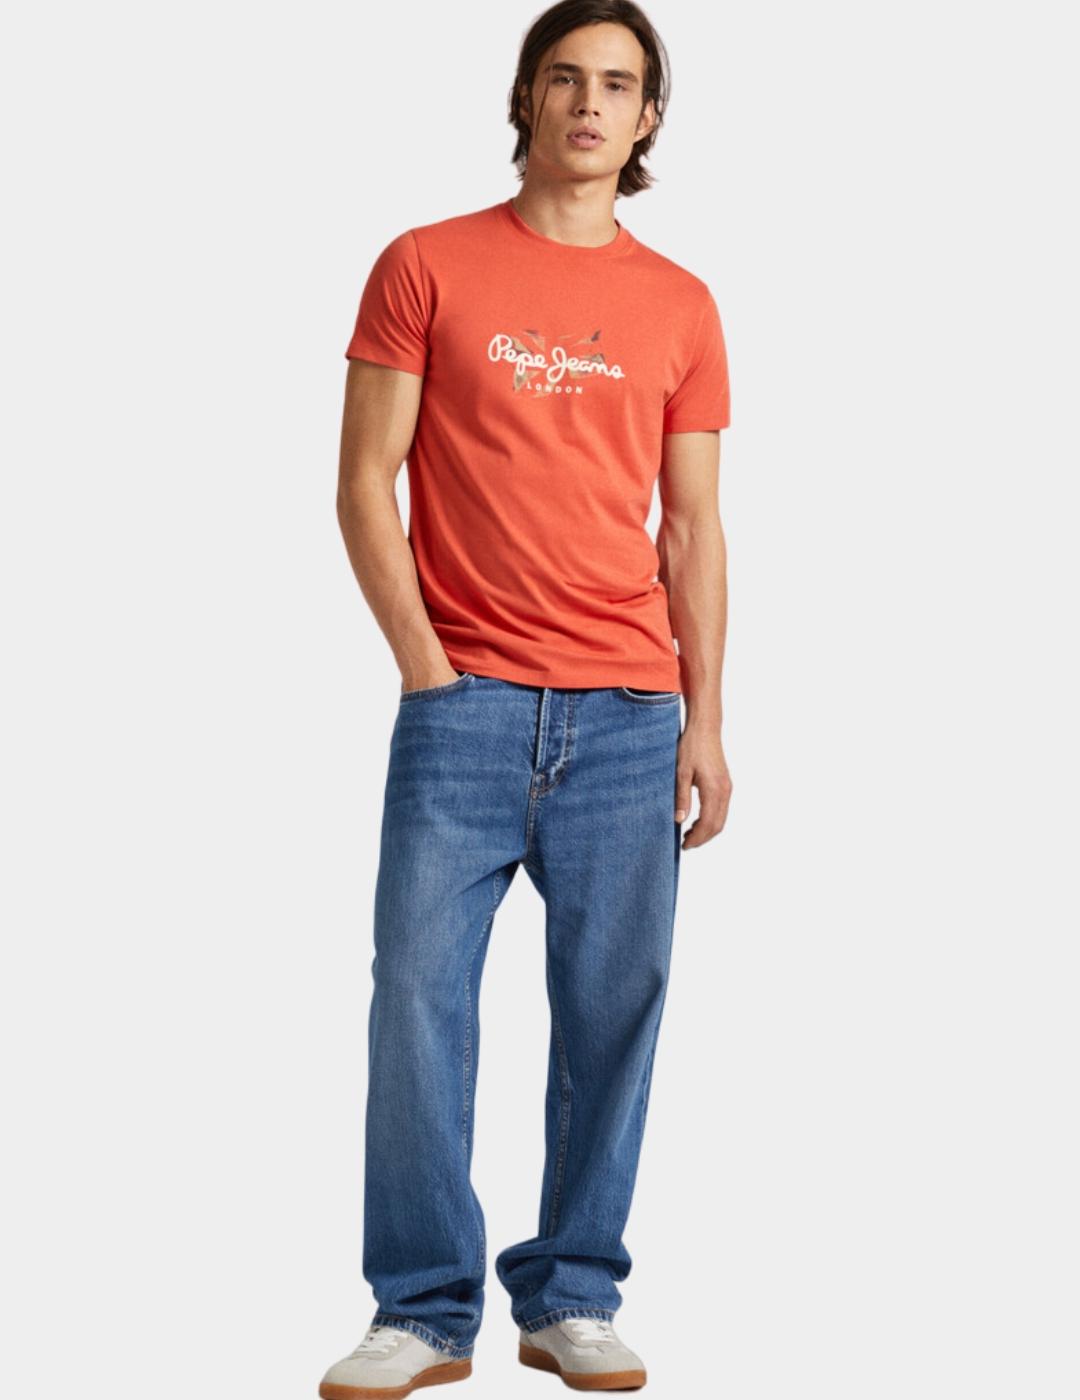 Camiseta Pepe Jeans Hombre Count Naranja